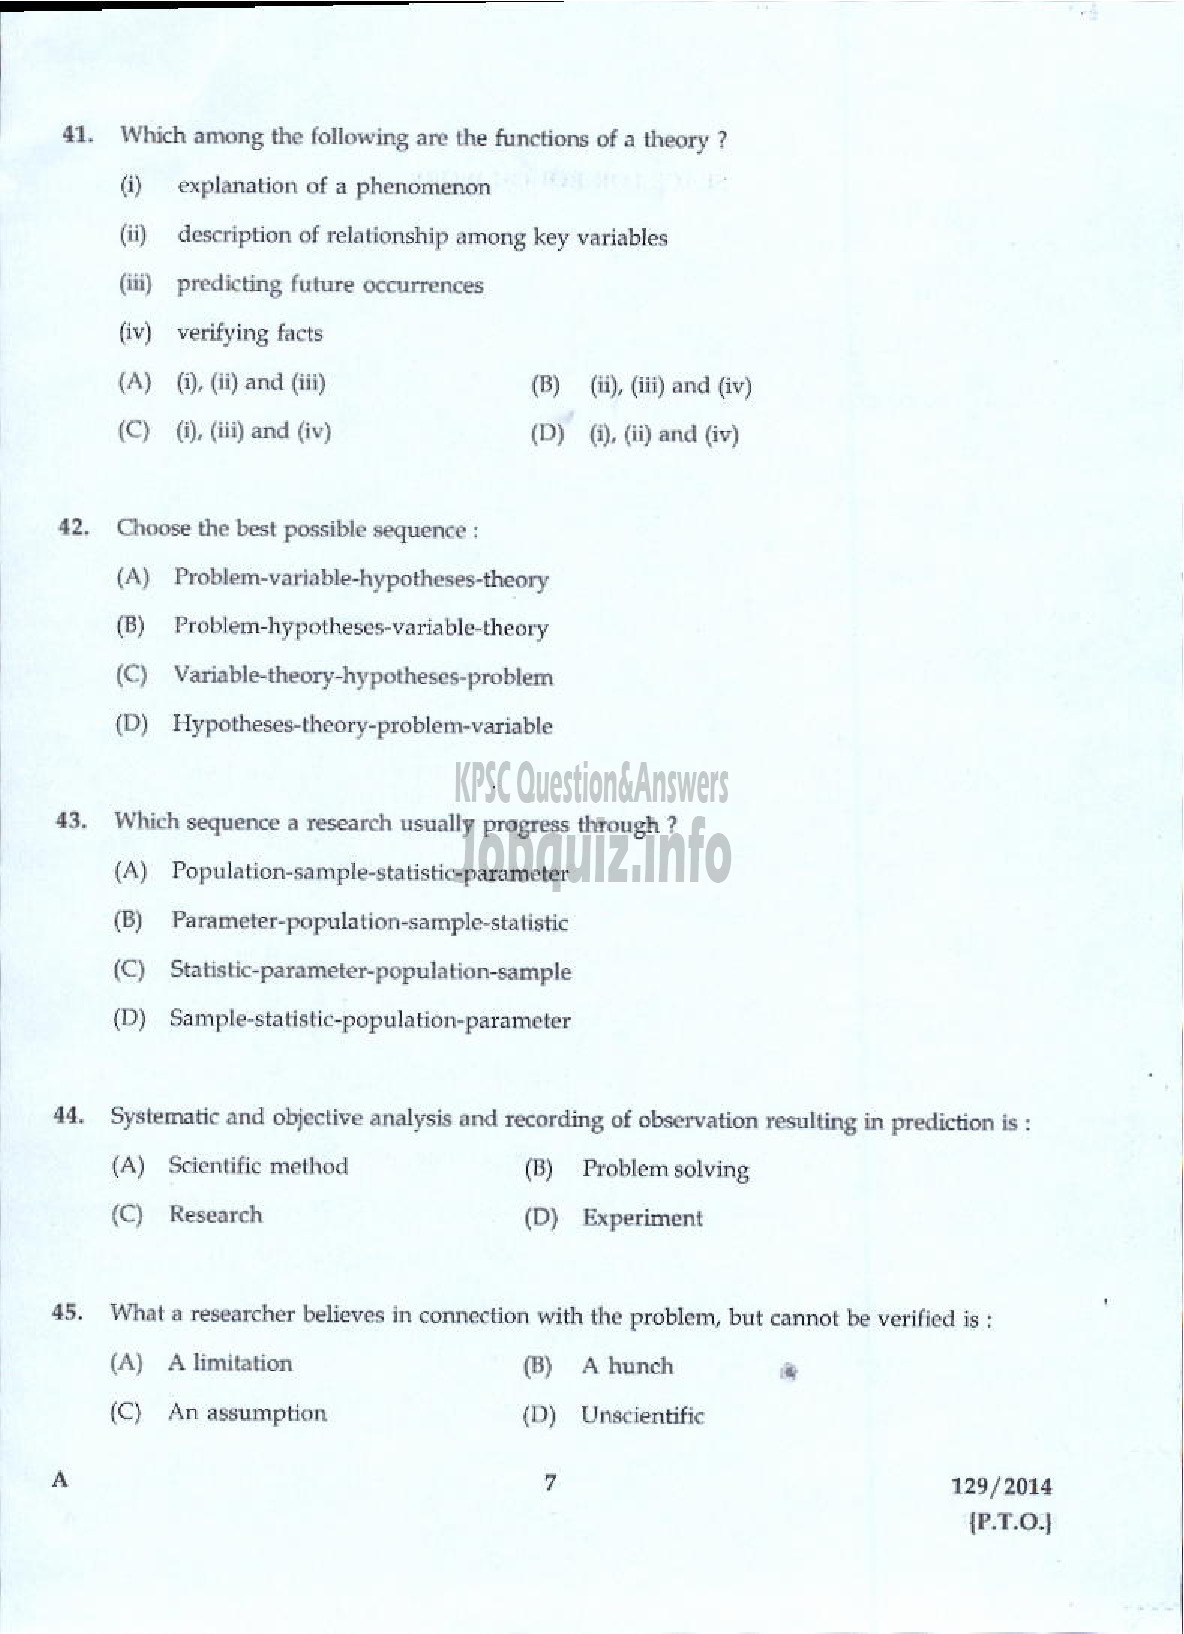 Kerala PSC Question Paper - LECTURER IN SANSKRIT VEDANTA KERALA COLLEGIATE EDUCATION-5